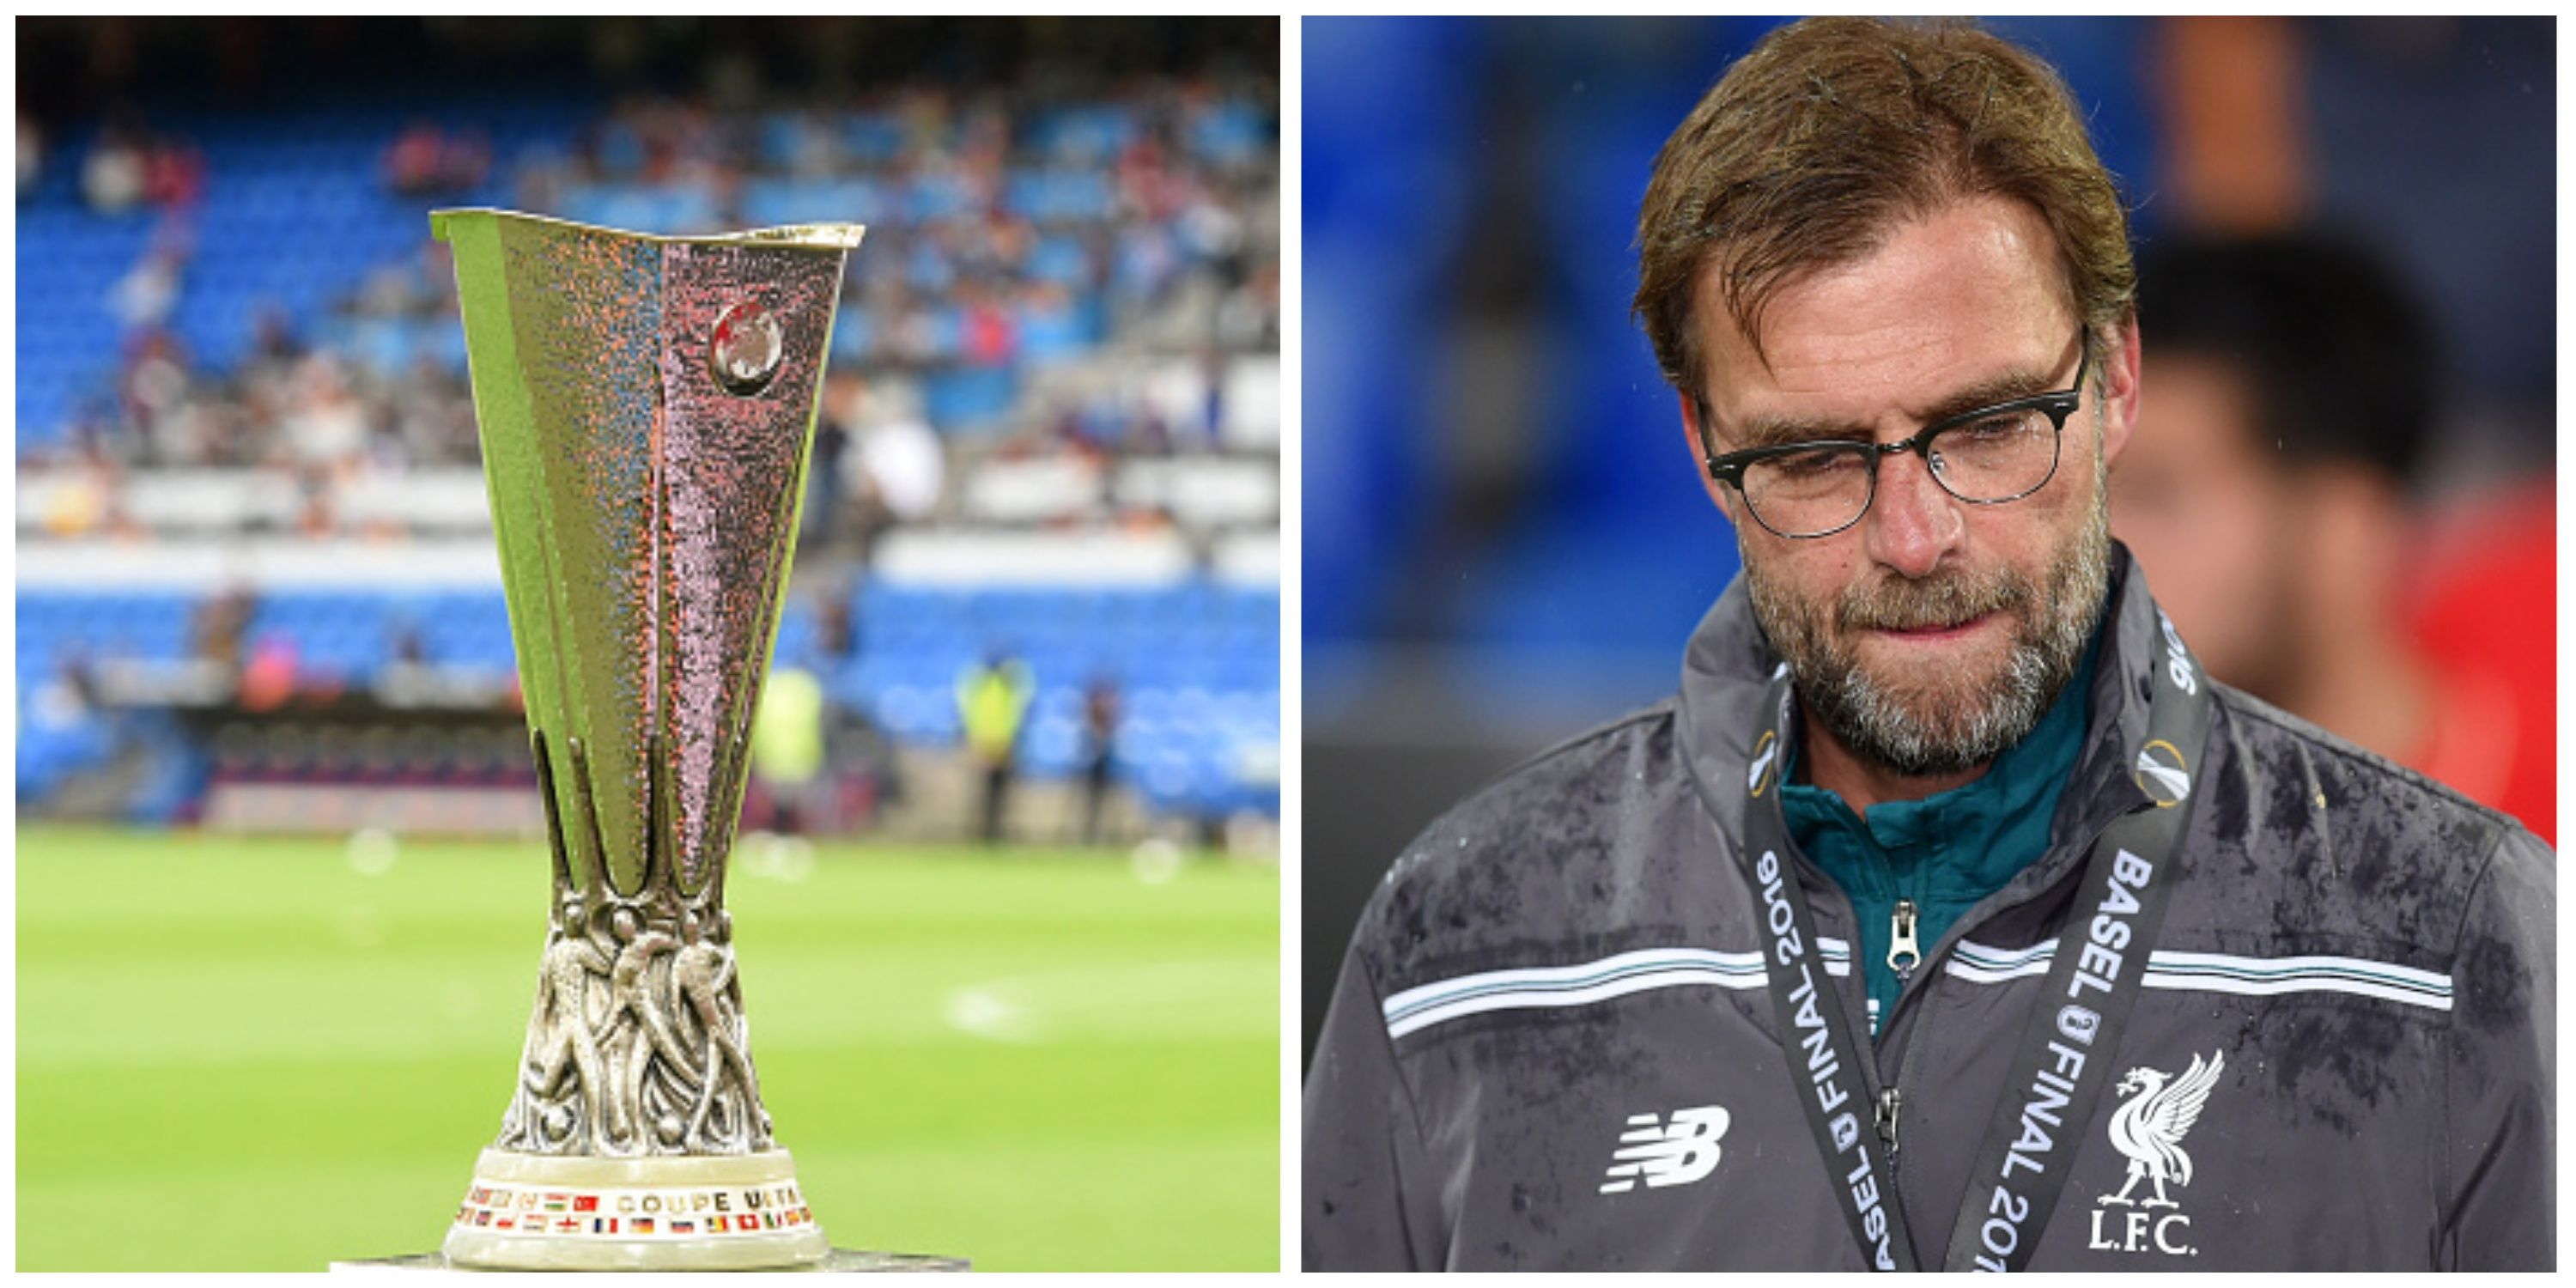 Europa League trophy and Jurgen Klopp.